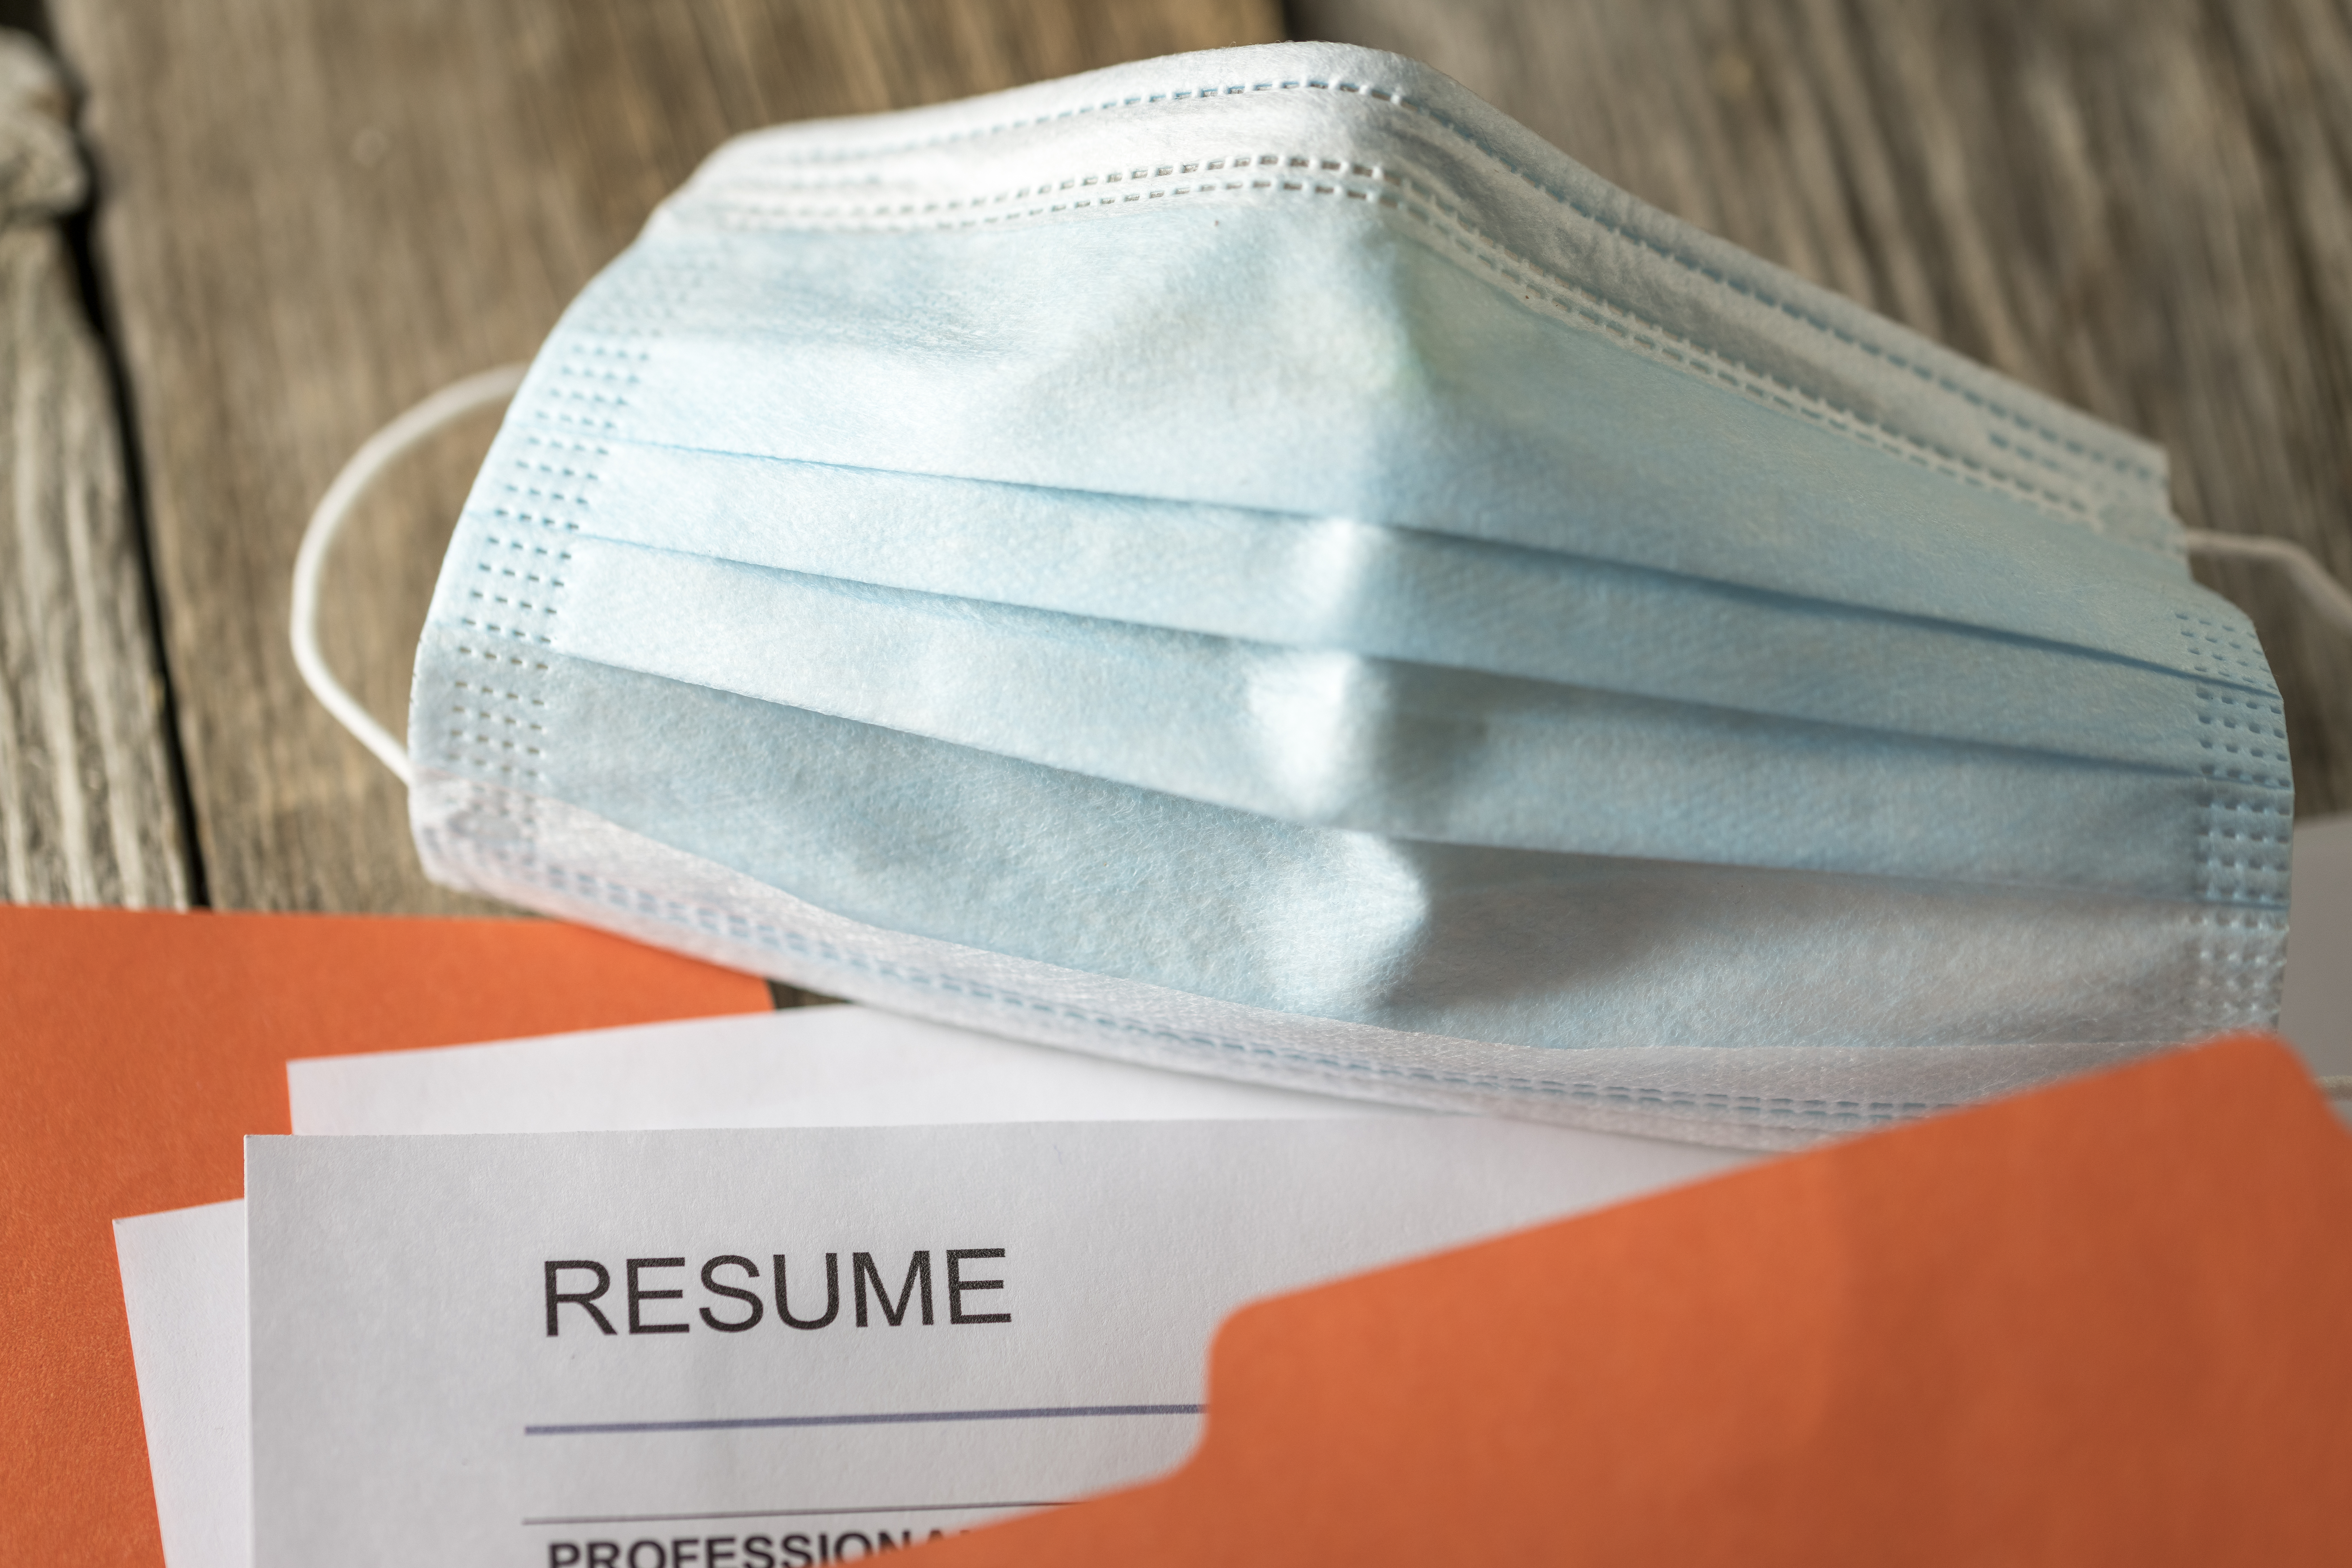 Stock photograph of job resume inside orange folder with mask.